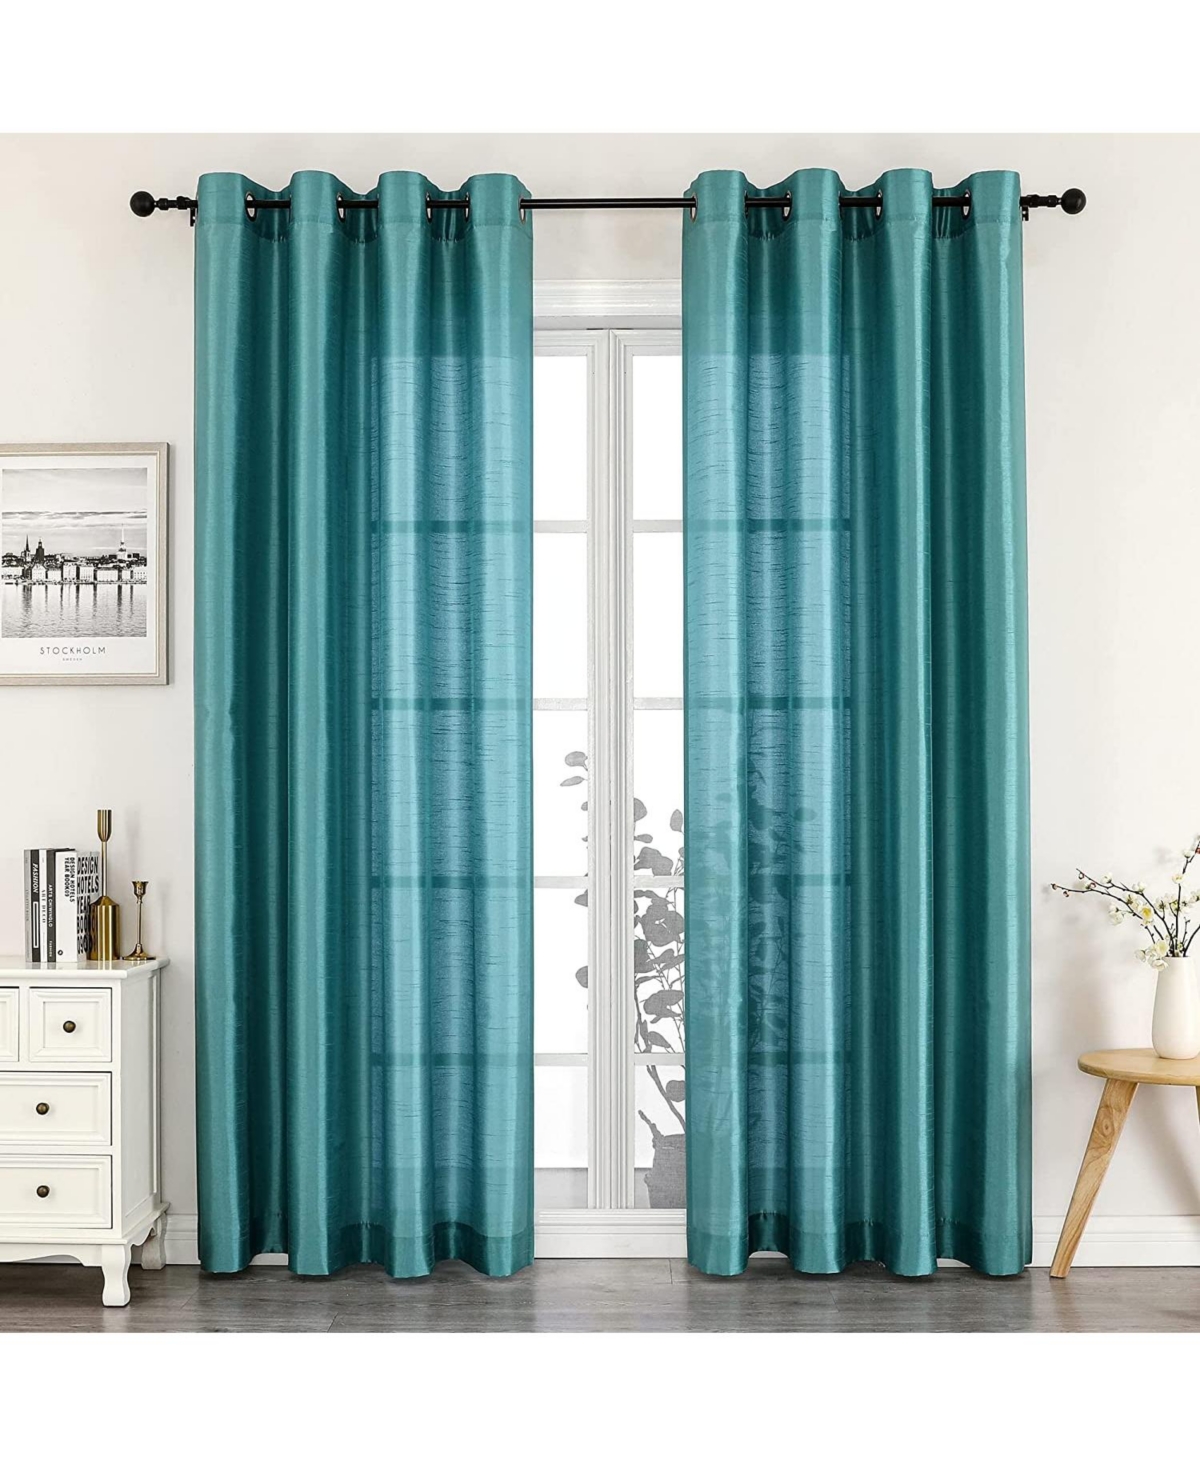 Home Living 2 Piece Lightweight Basic Sheer Grommet Top Curtain Panels - Ivory